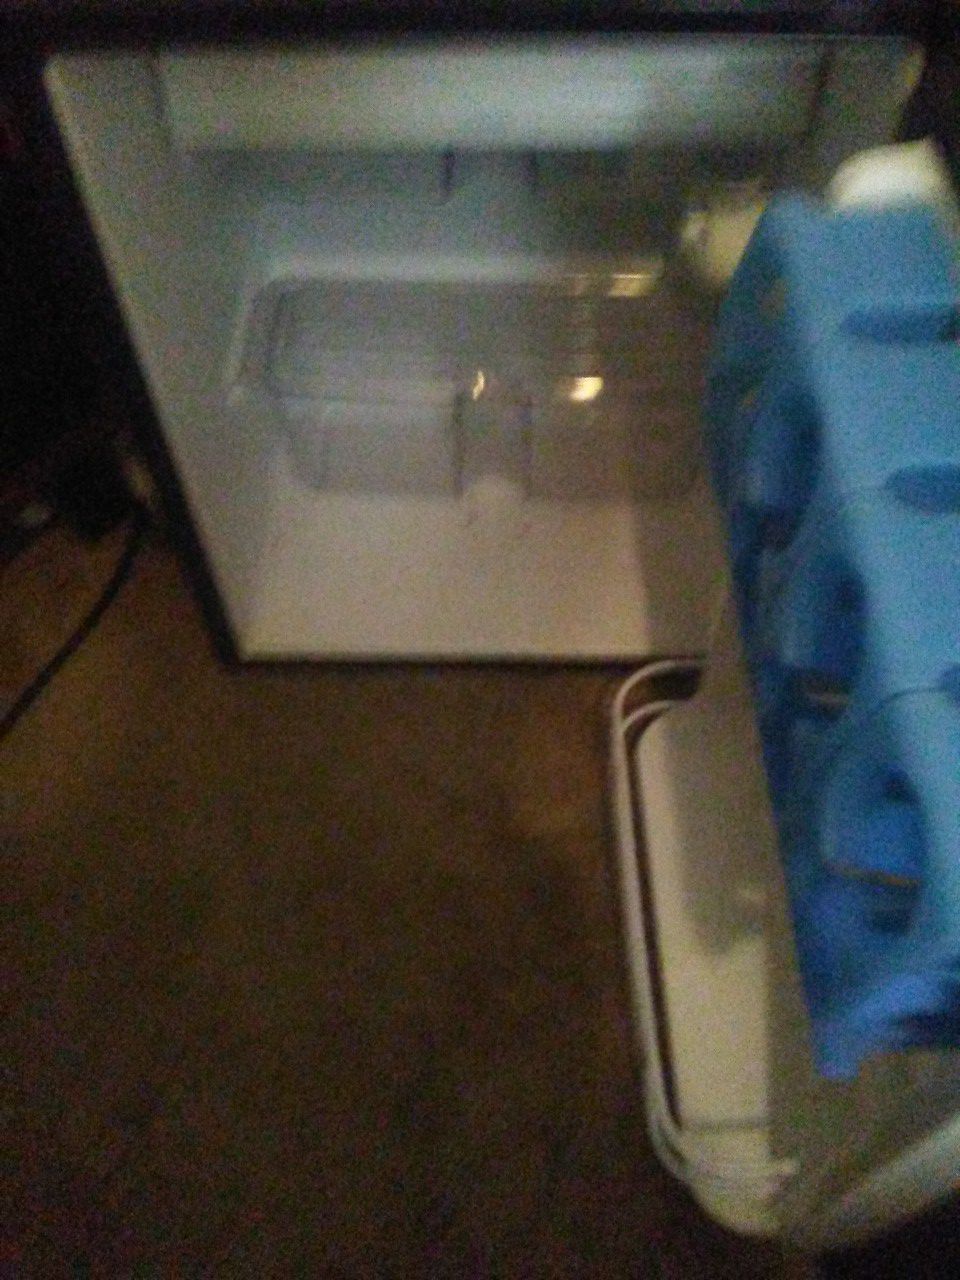 Mini fridge (whirlpool) like new great deal!!